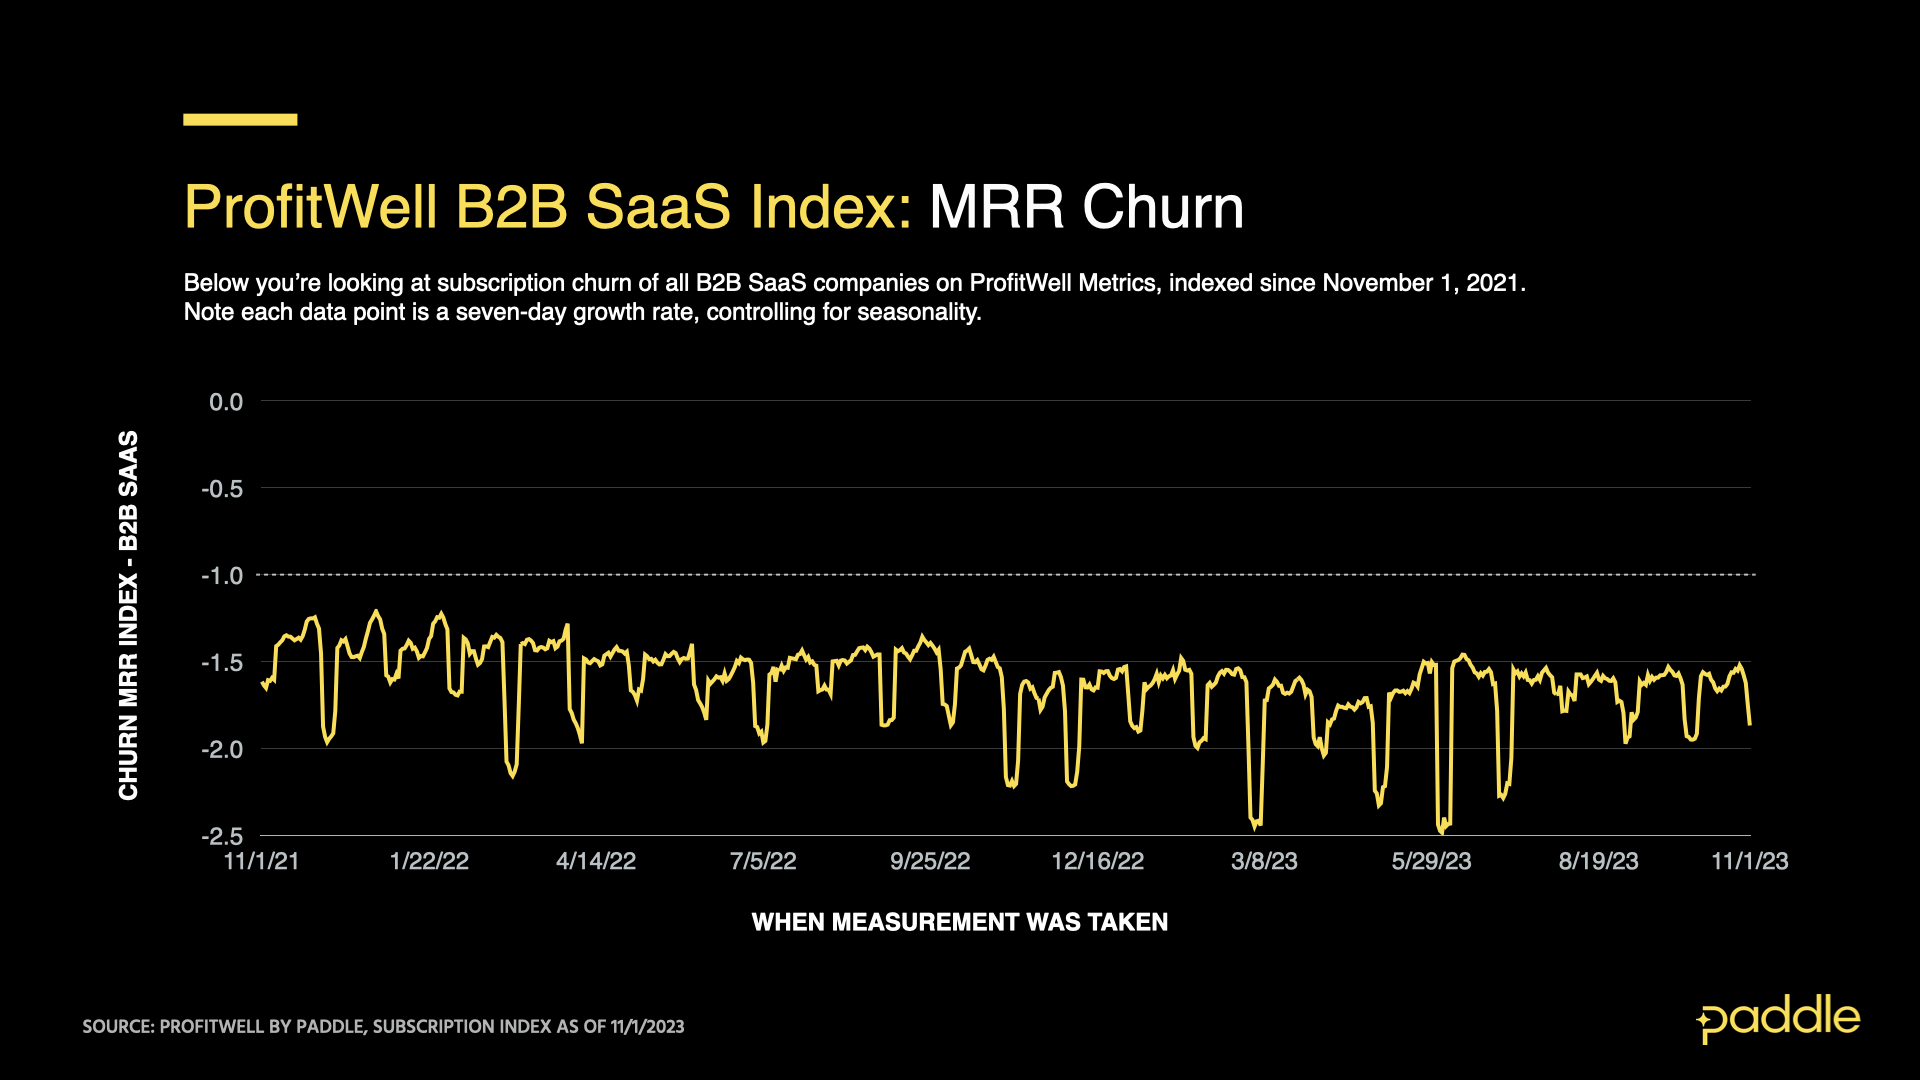 ProfitWell B2B SaaS Churn Index as of November 1, 2023 - MRR impact of churning customers